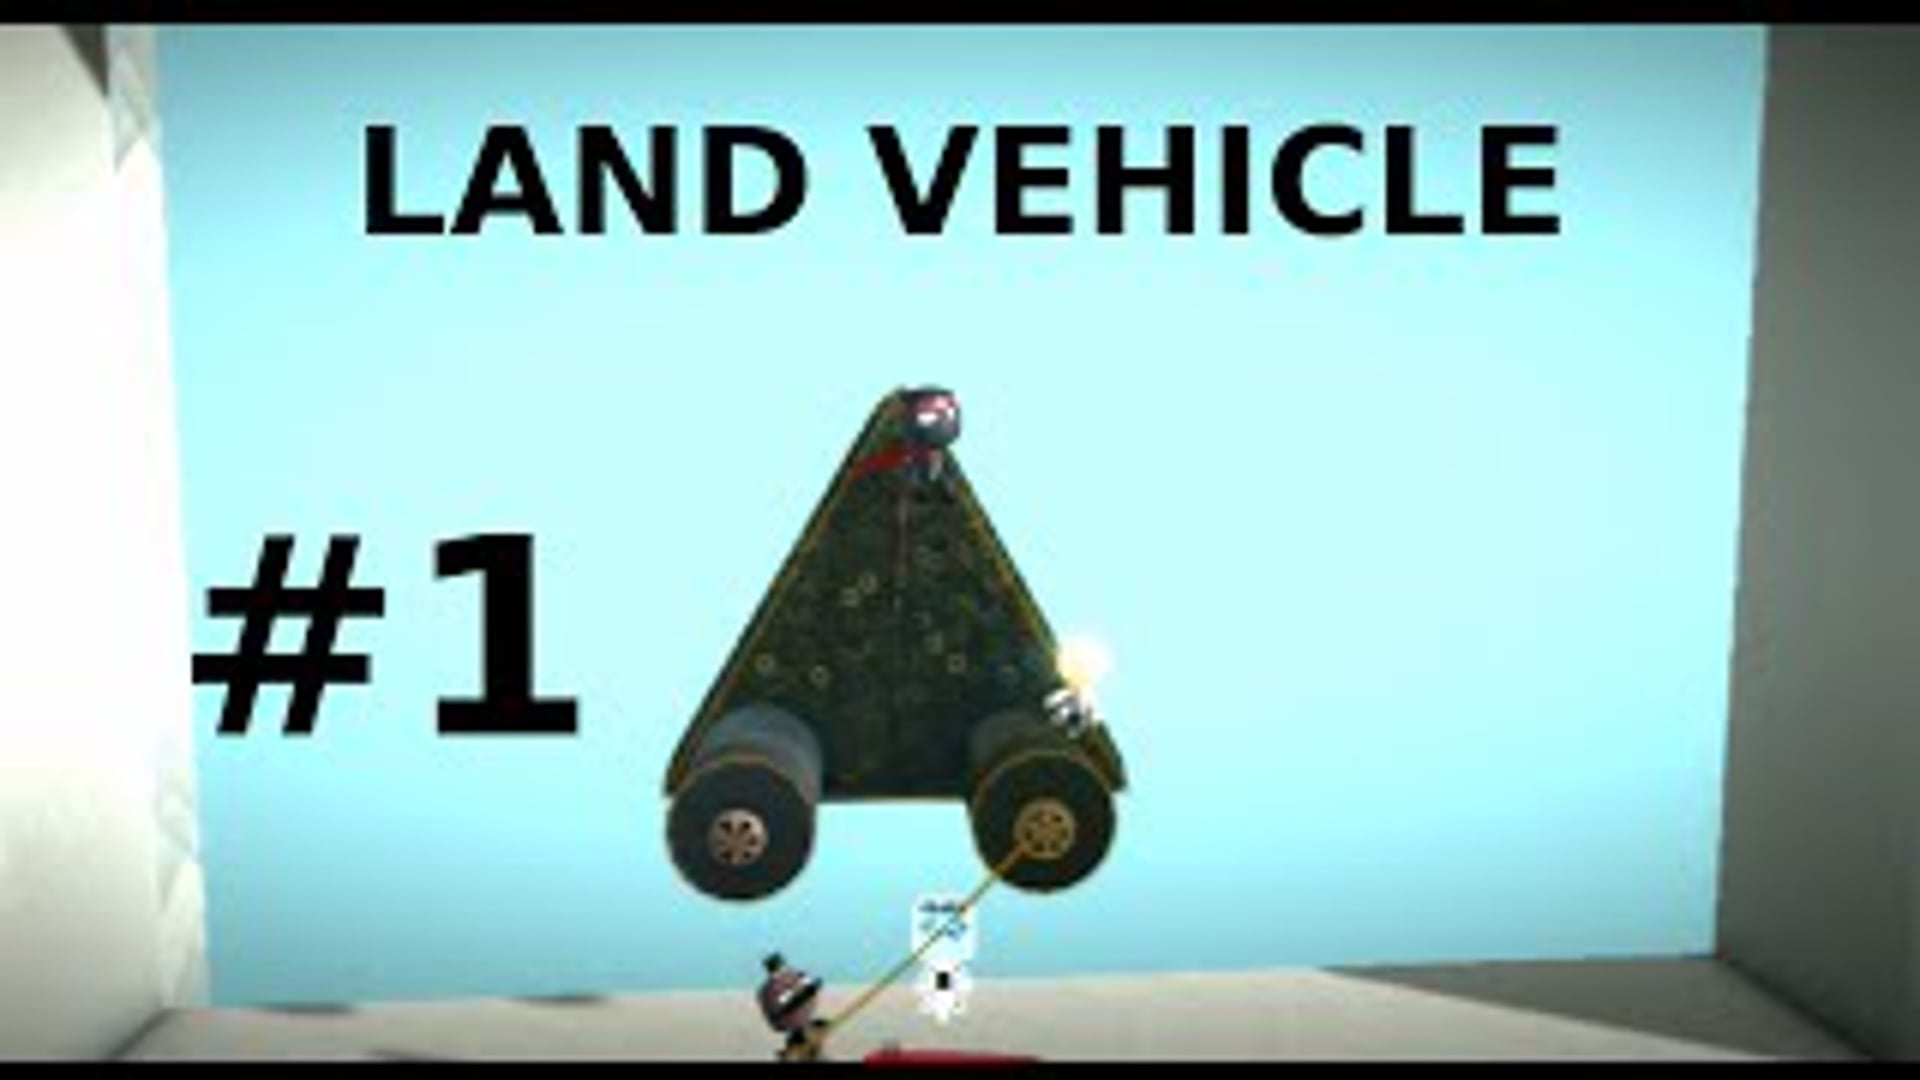 LBP 2 Building Challenge - #1 - Land Vehicle